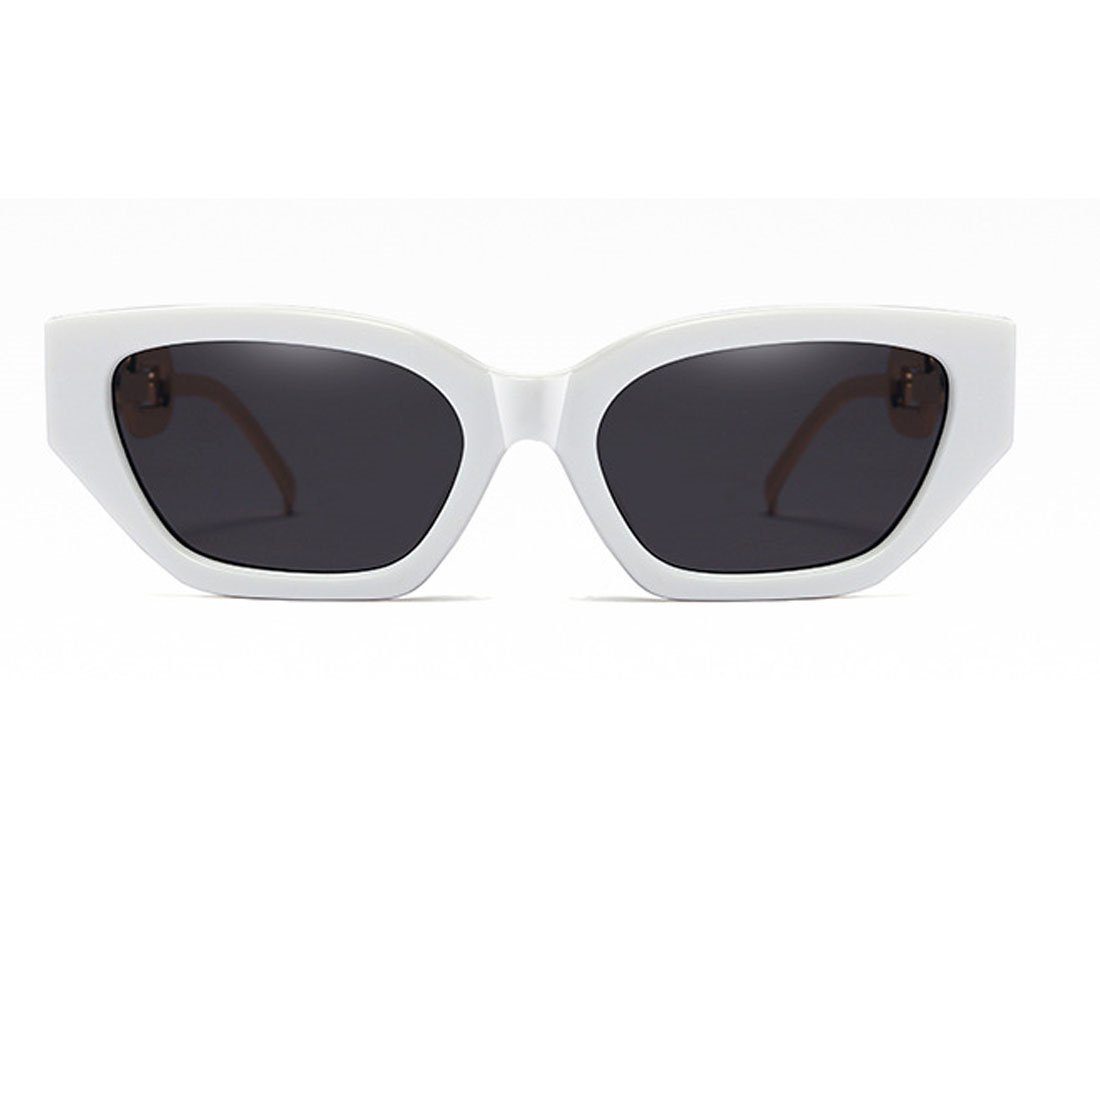 aus kleinem DÖRÖY Damen-Sonnenbrille Rahmen Trendige Sonnenbrille mit Metall,Sonnenbrille